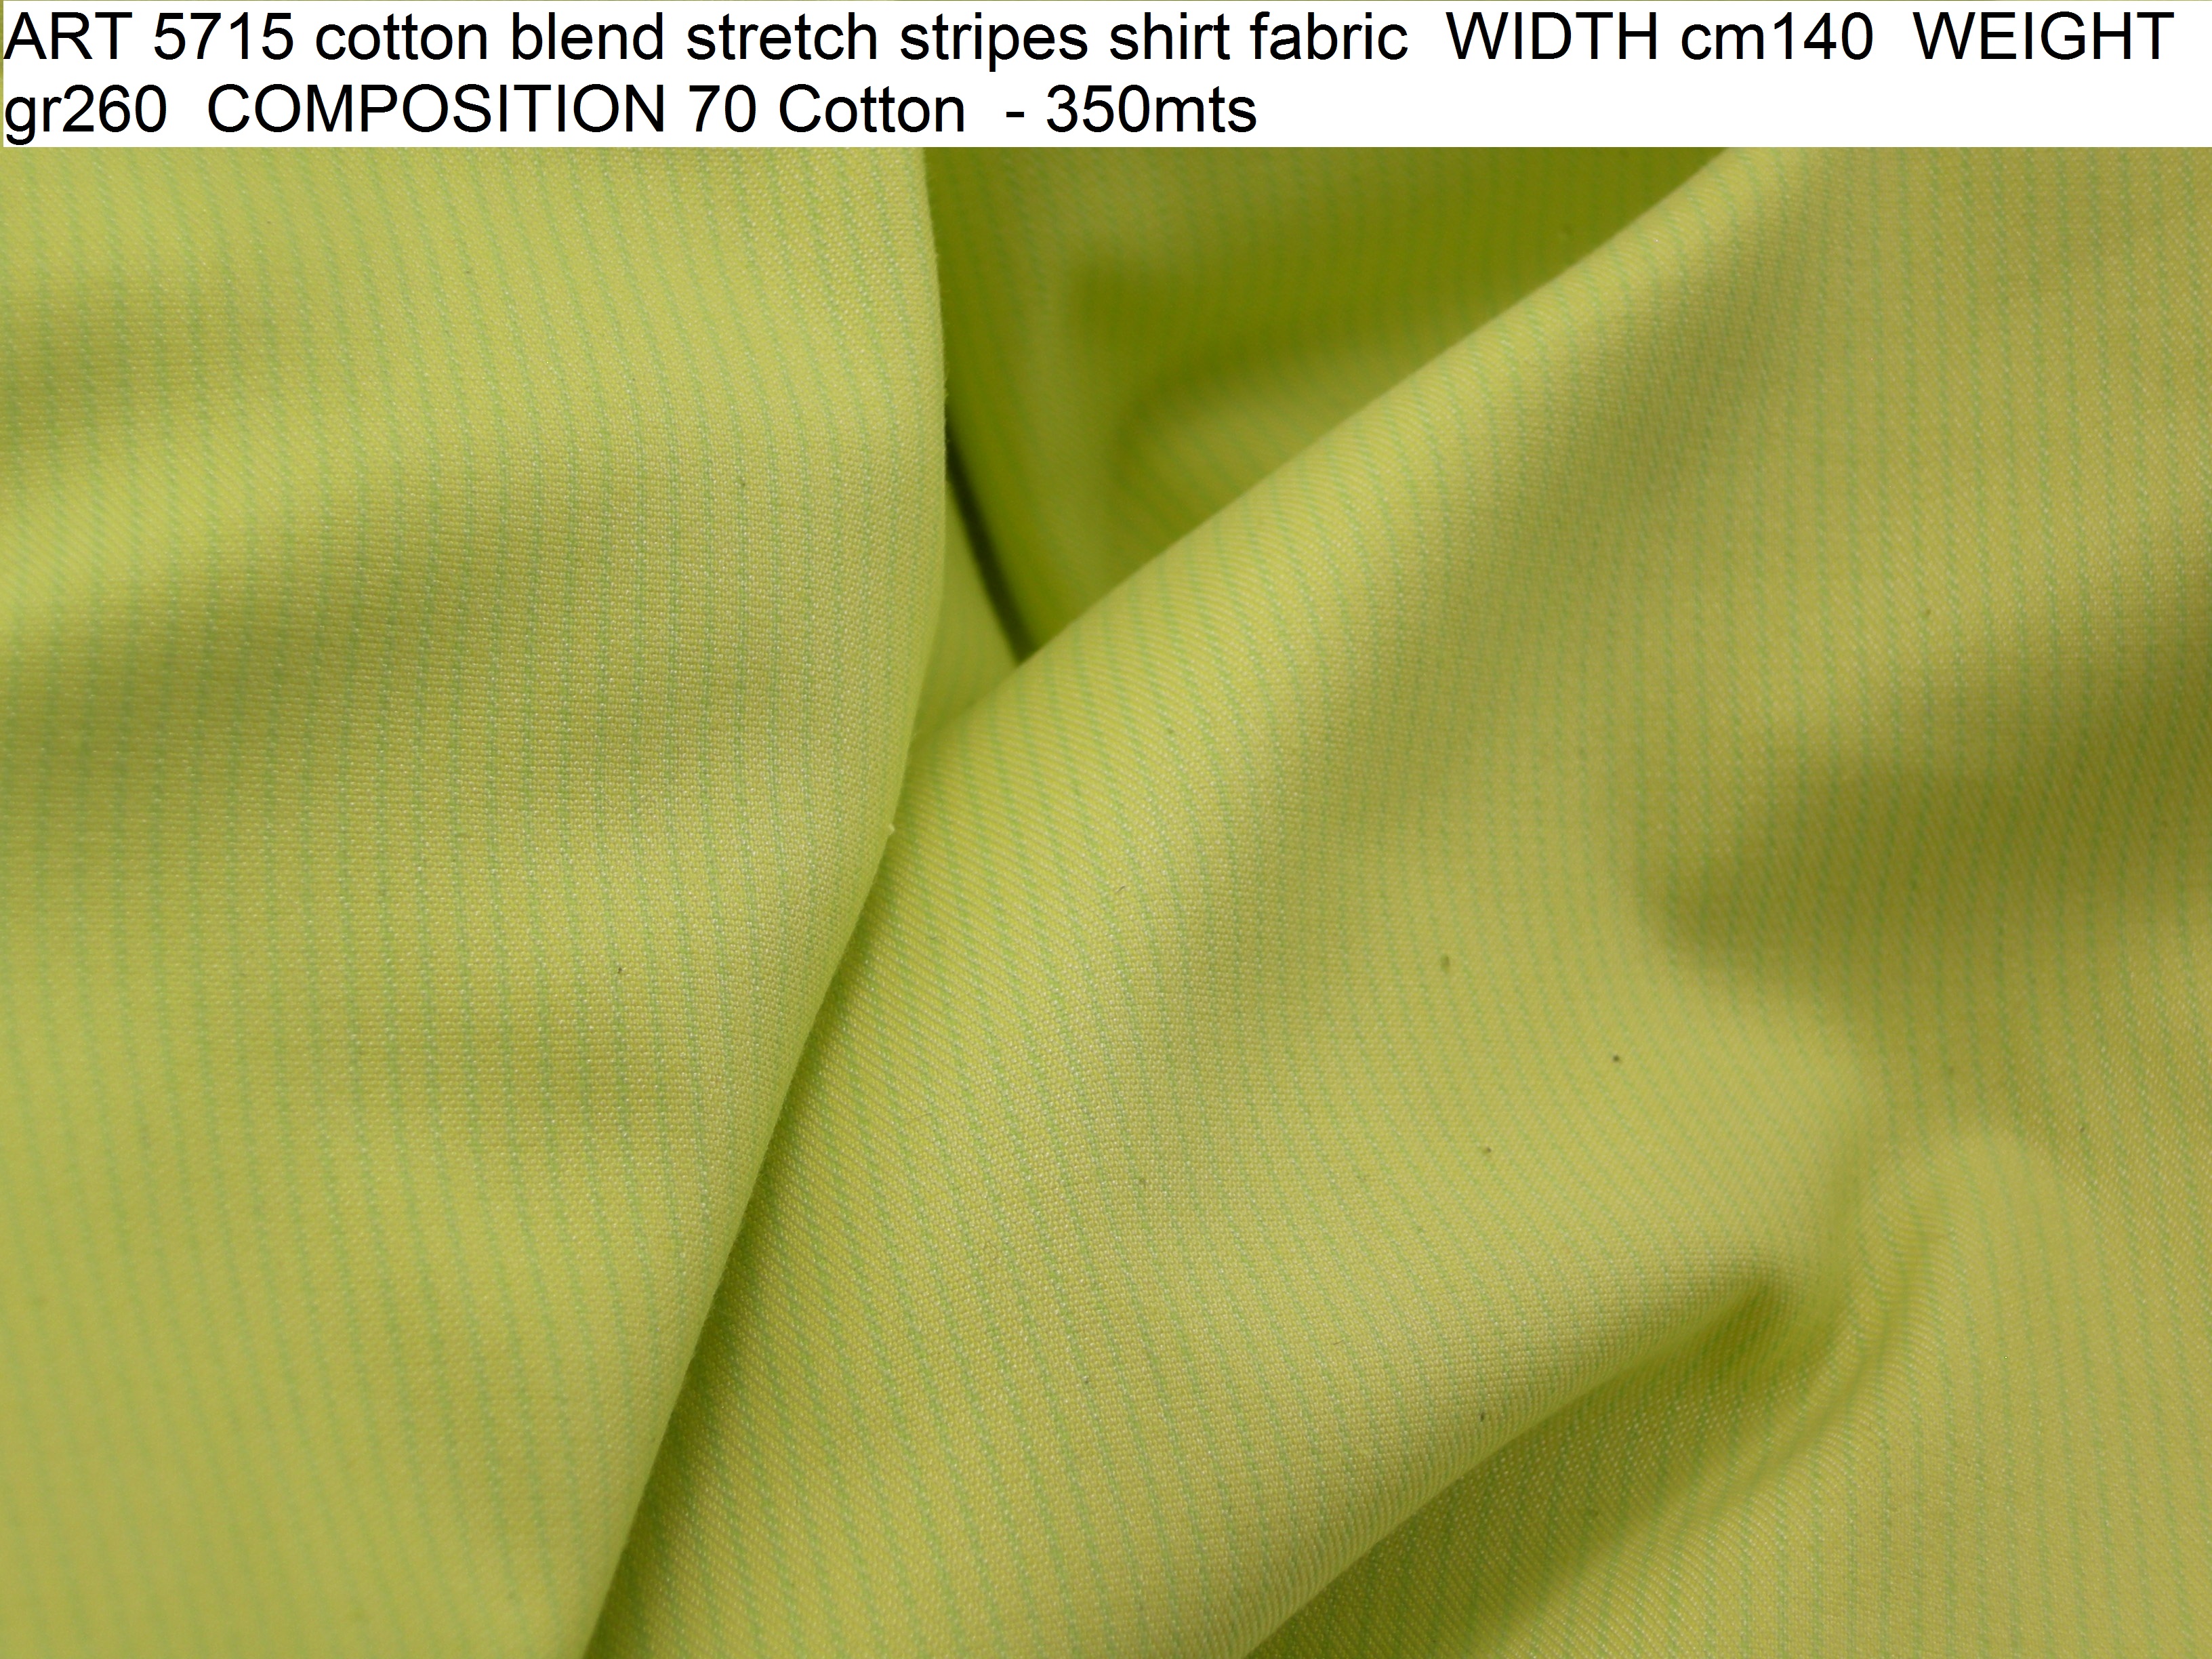 ART 5715 cotton blend stretch stripes shirt fabric WIDTH cm140 WEIGHT gr260 COMPOSITION 70 Cotton - 350mts